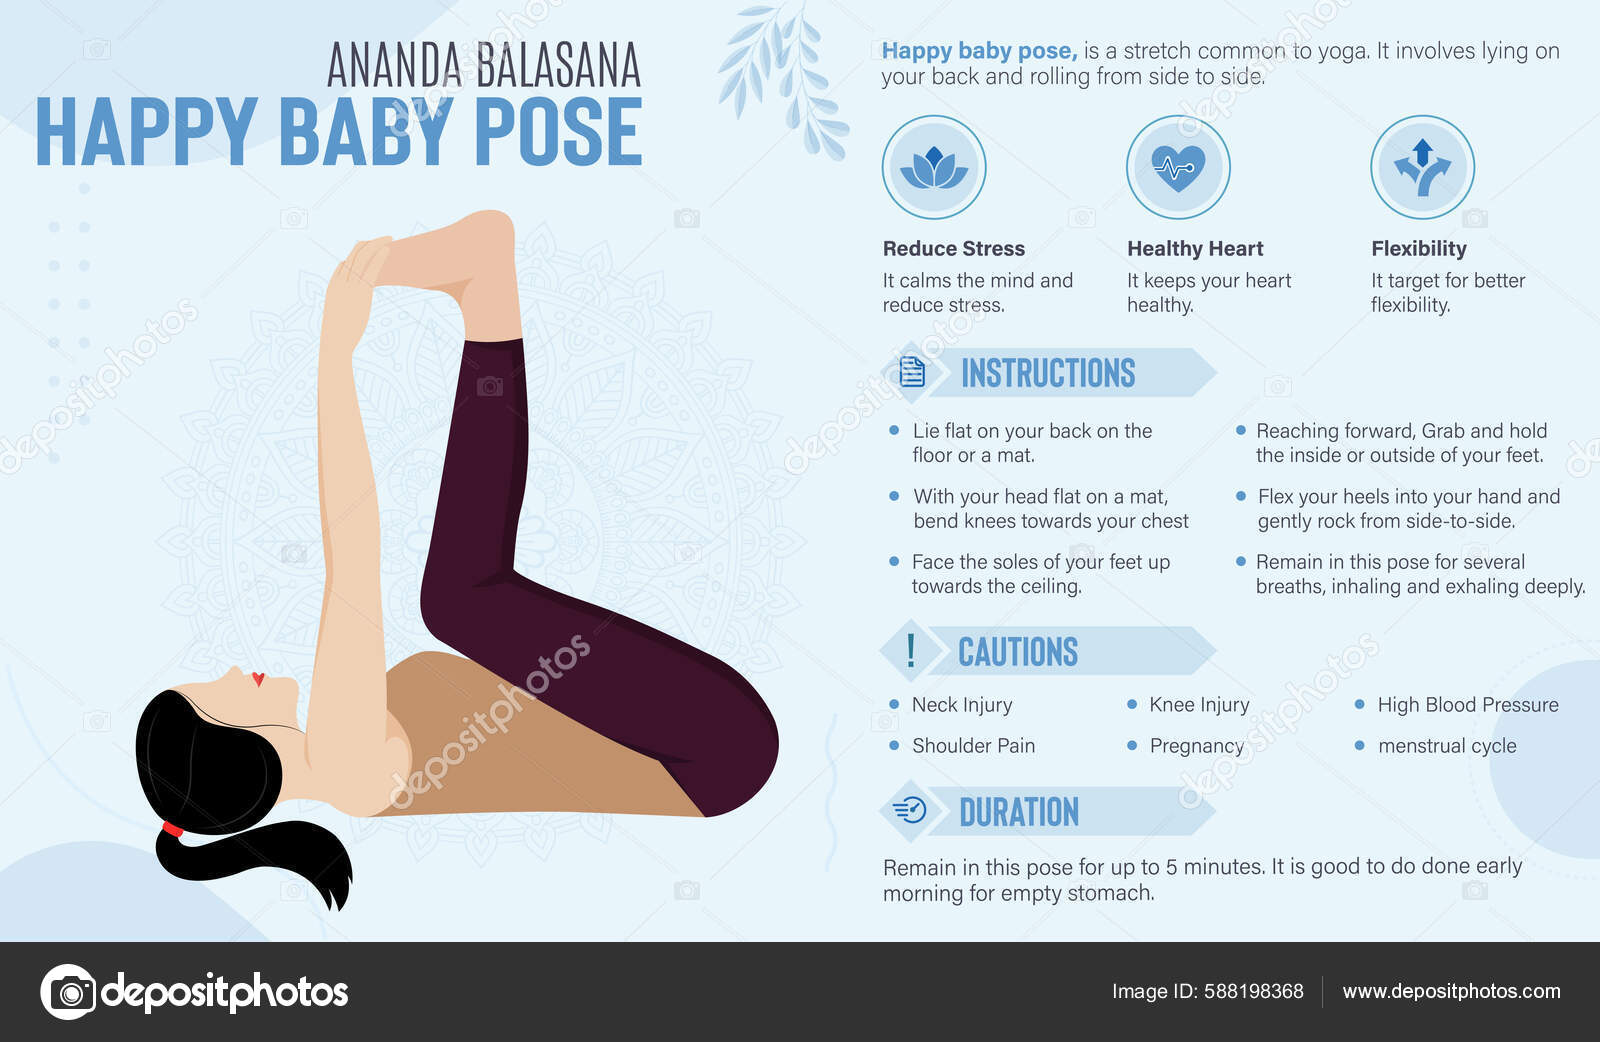 Top 10 health benefits of Ananda Balasana (Happy Baby Pose) - Rishikul  Yogshala Blog